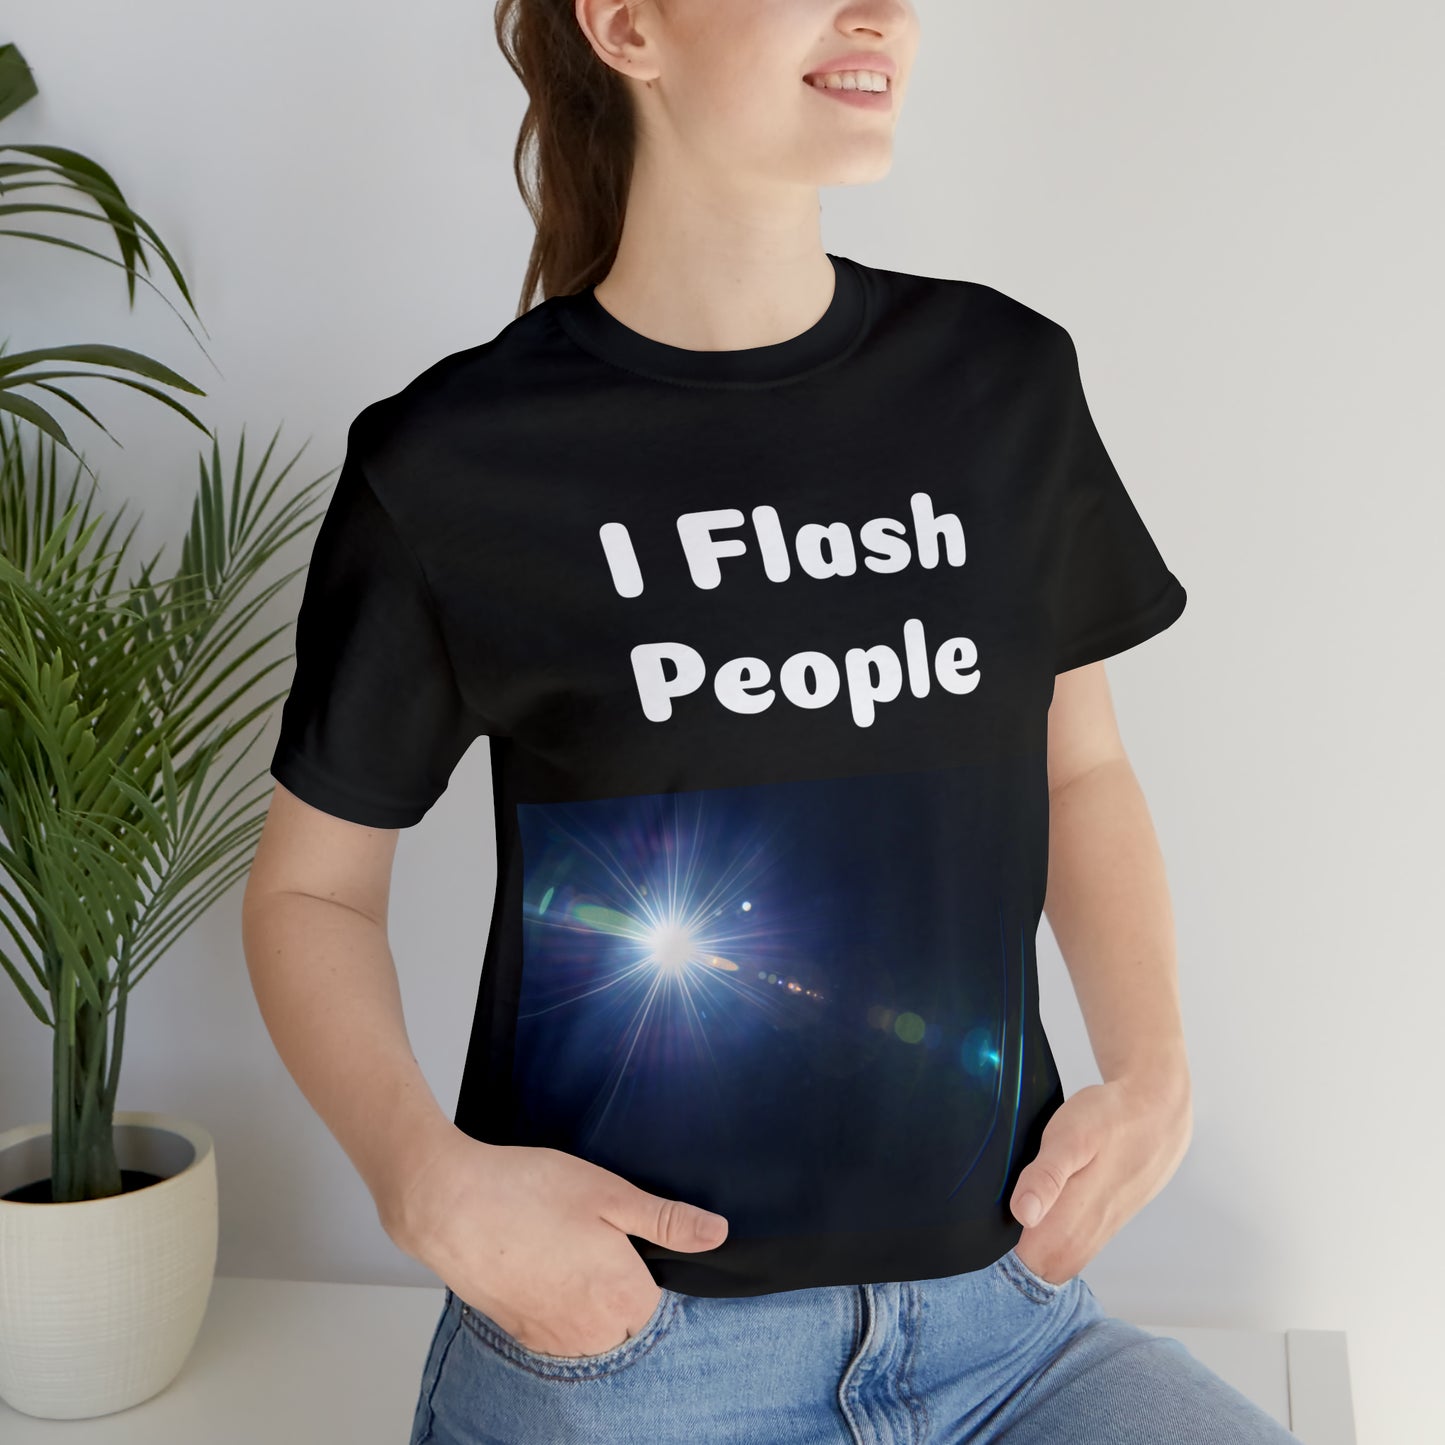 I Flash People T-Shirt